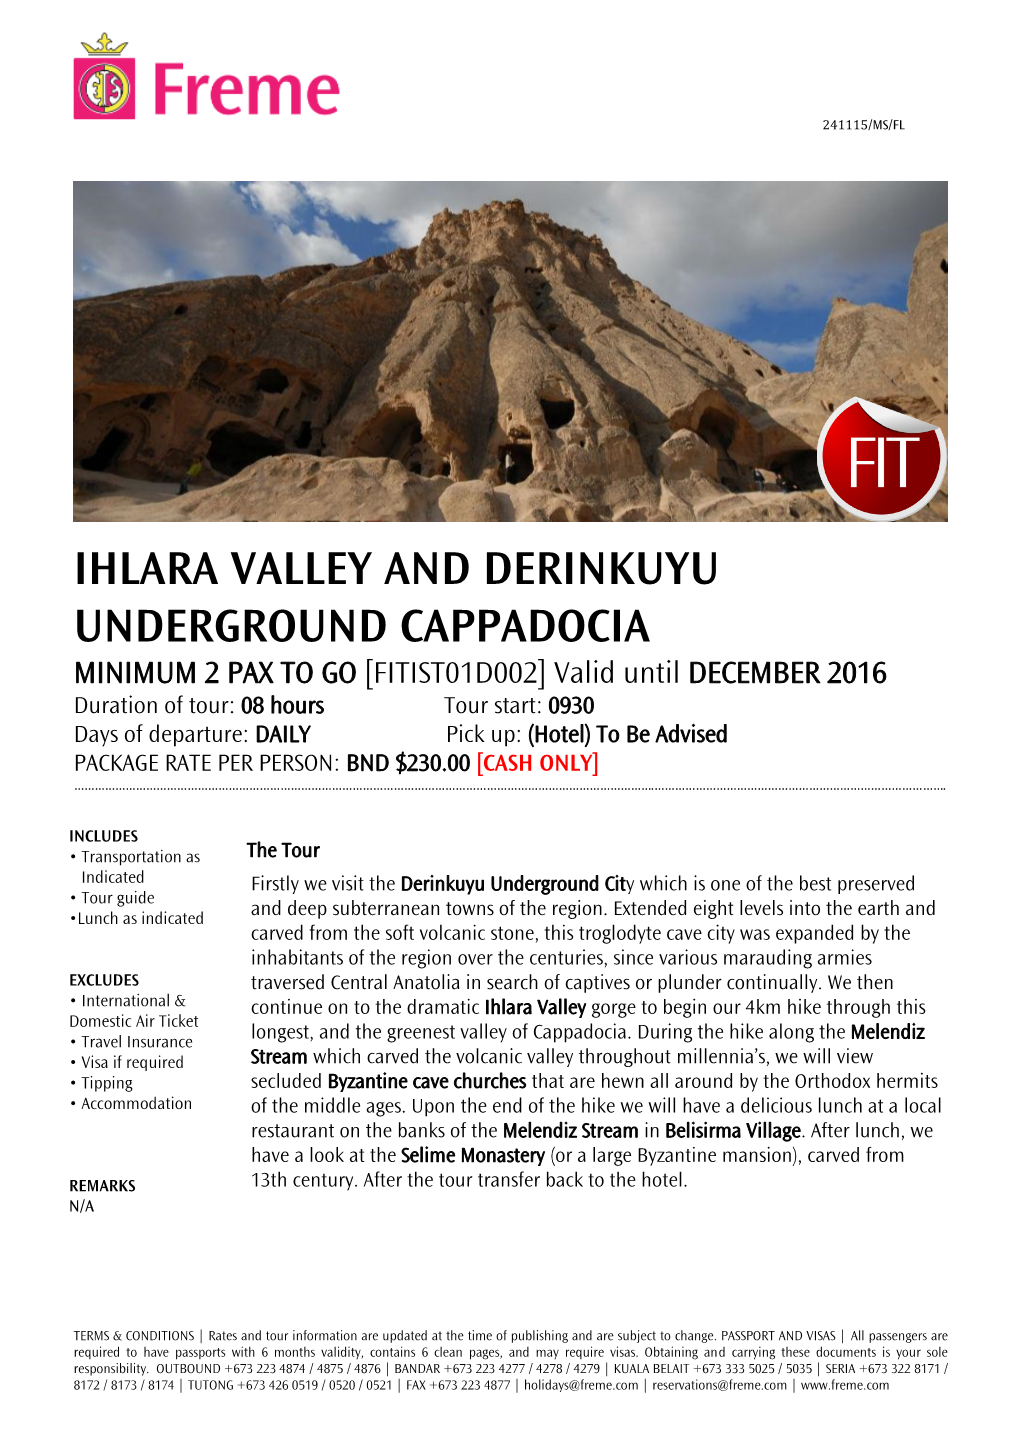 Ihlara Valley and Derinkuyu Underground Cappadocia